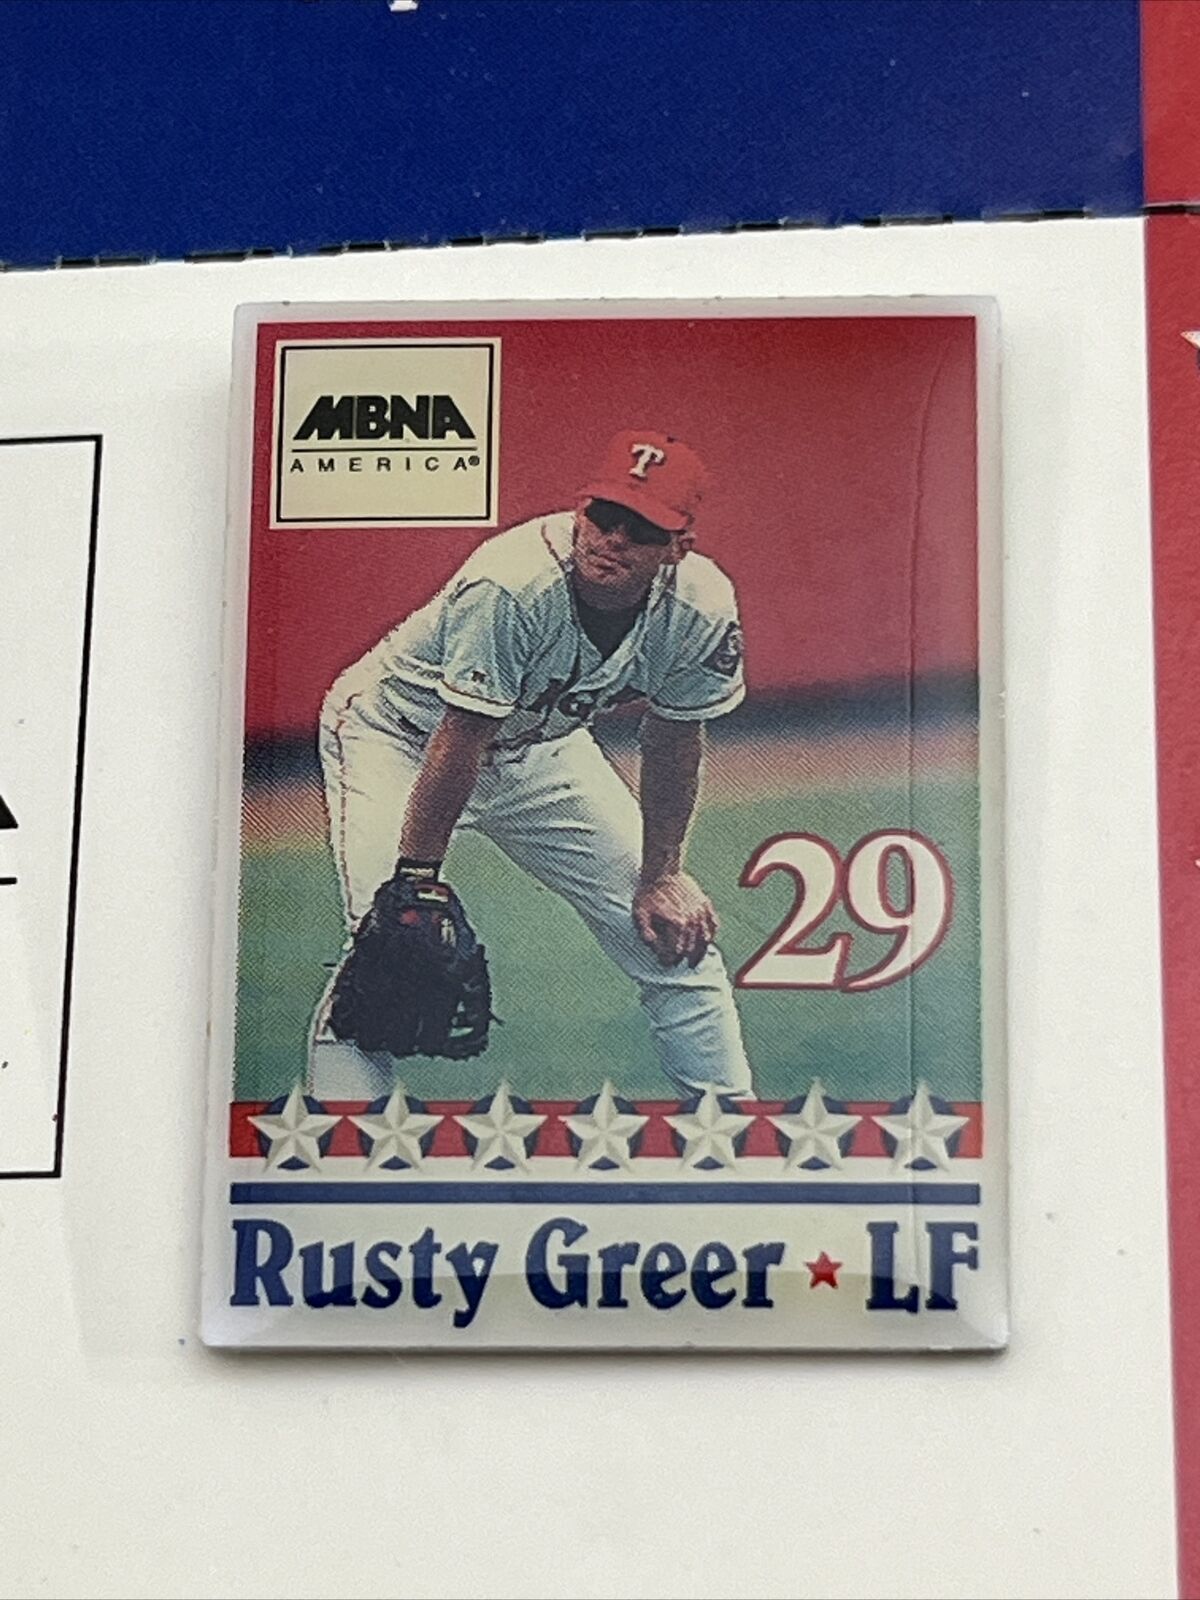 Rusty Greer Texas Rangers 1998 MBNA Commemorative MLB Baseball Lapel Hat Pin